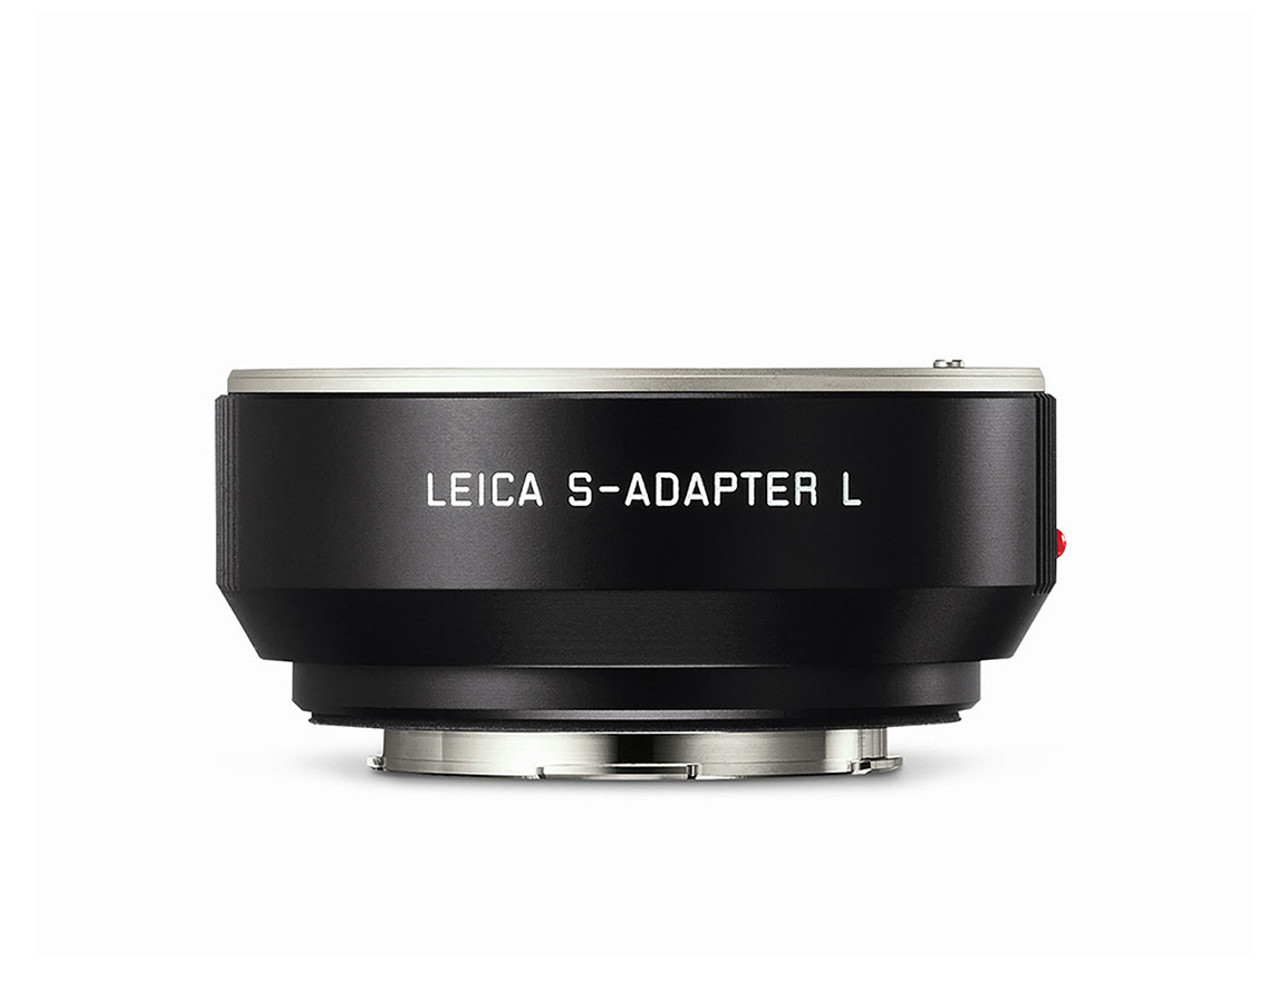 Ontaarden fluiten rek Leica S-Adapter L for SL Camera